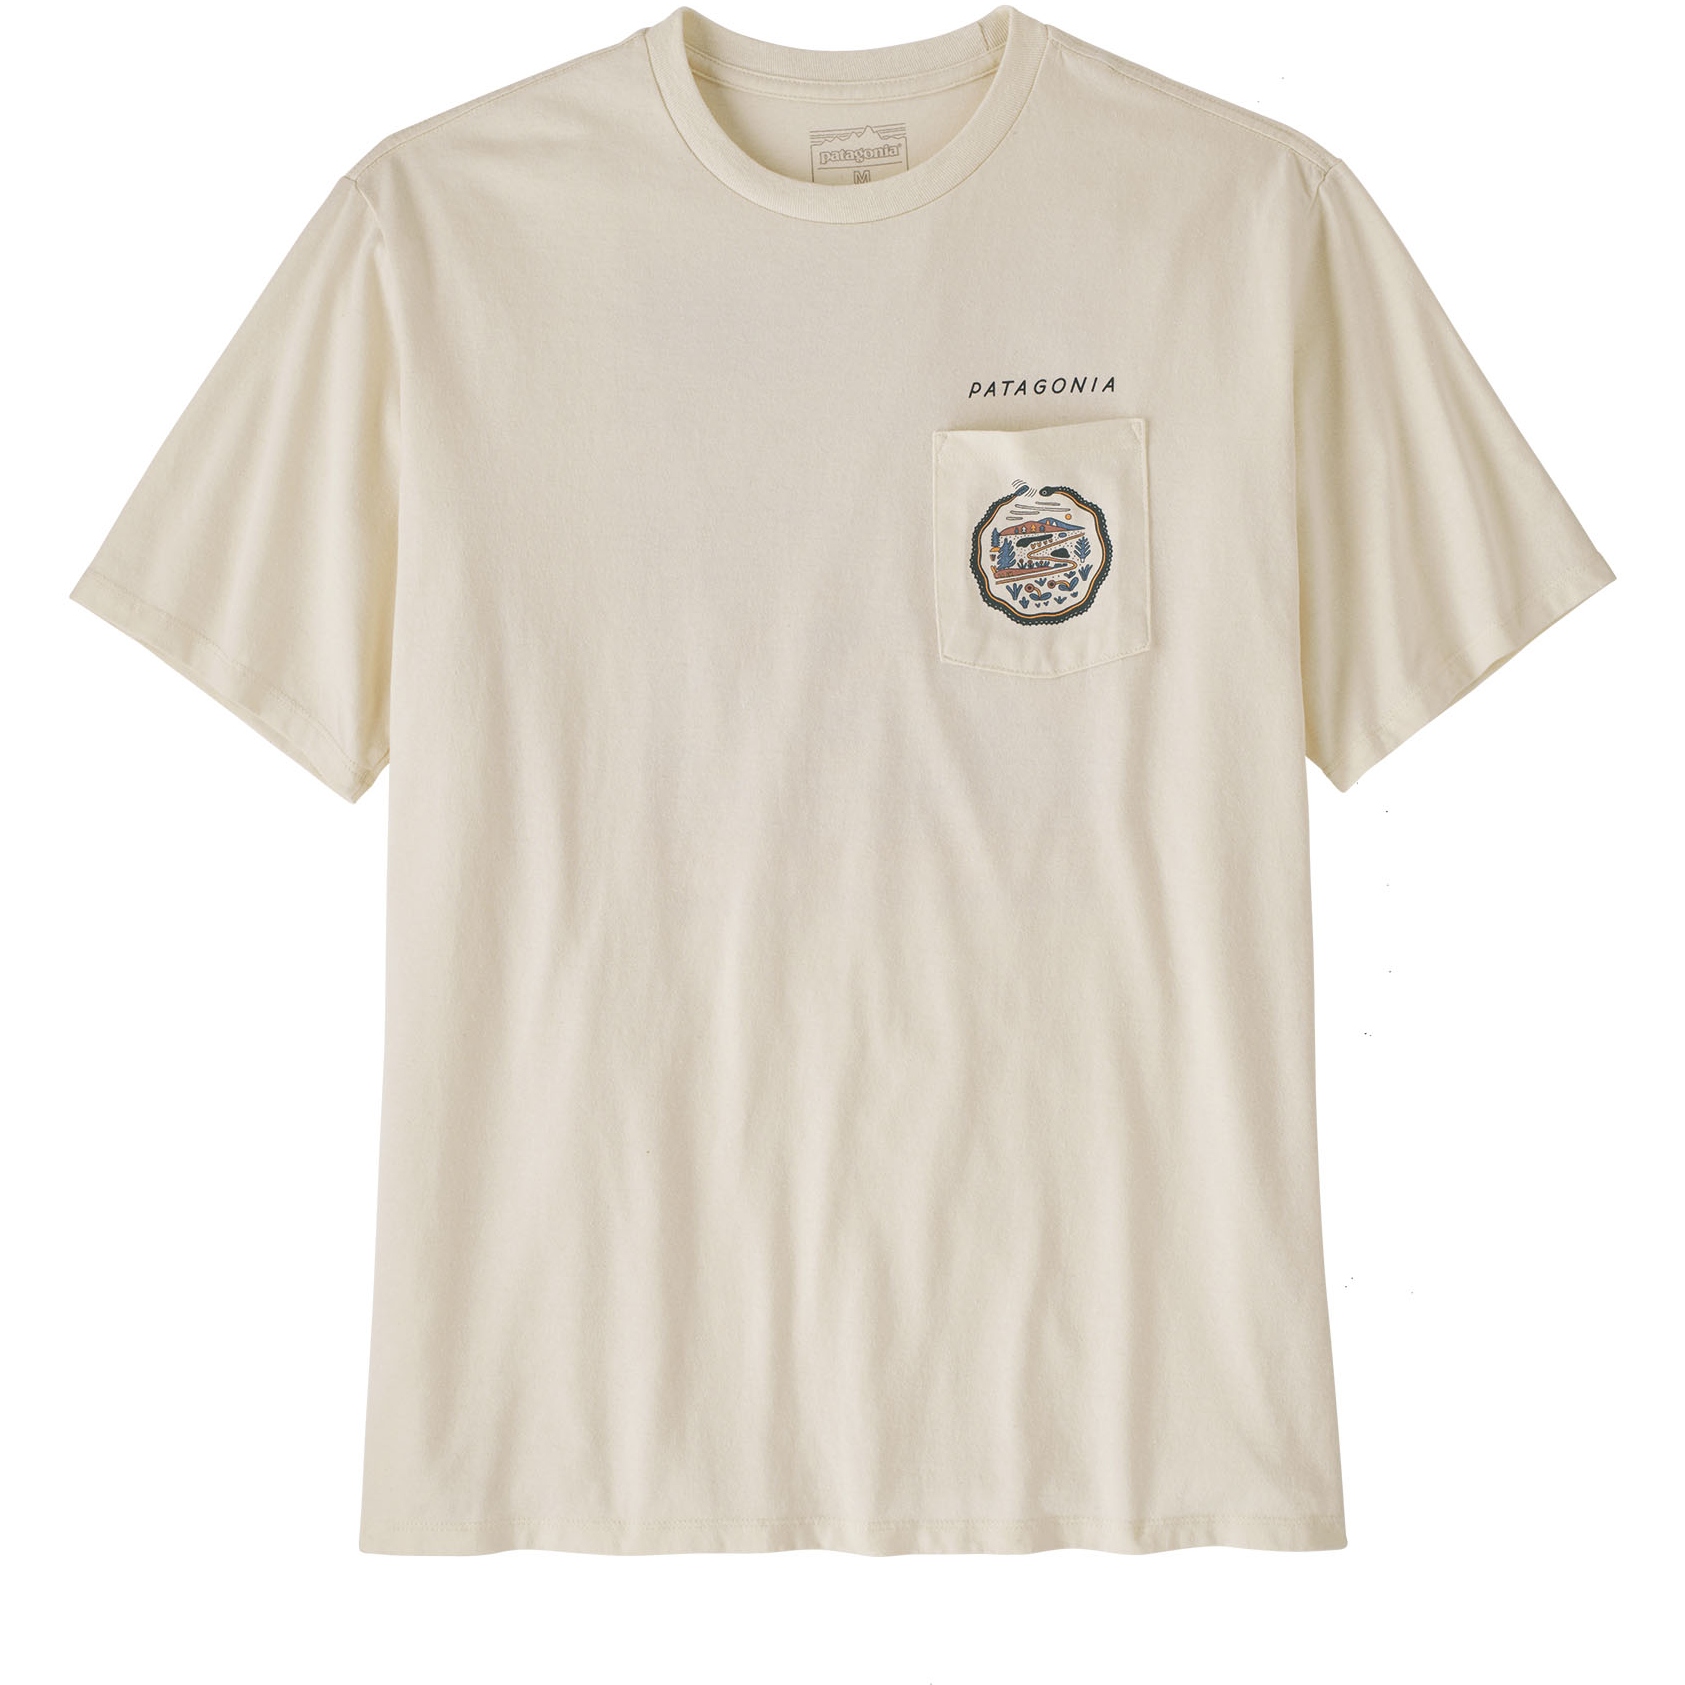 Productfoto van Patagonia Commontrail Pocket Responsibili-Tee T-Shirt Heren - Birch White